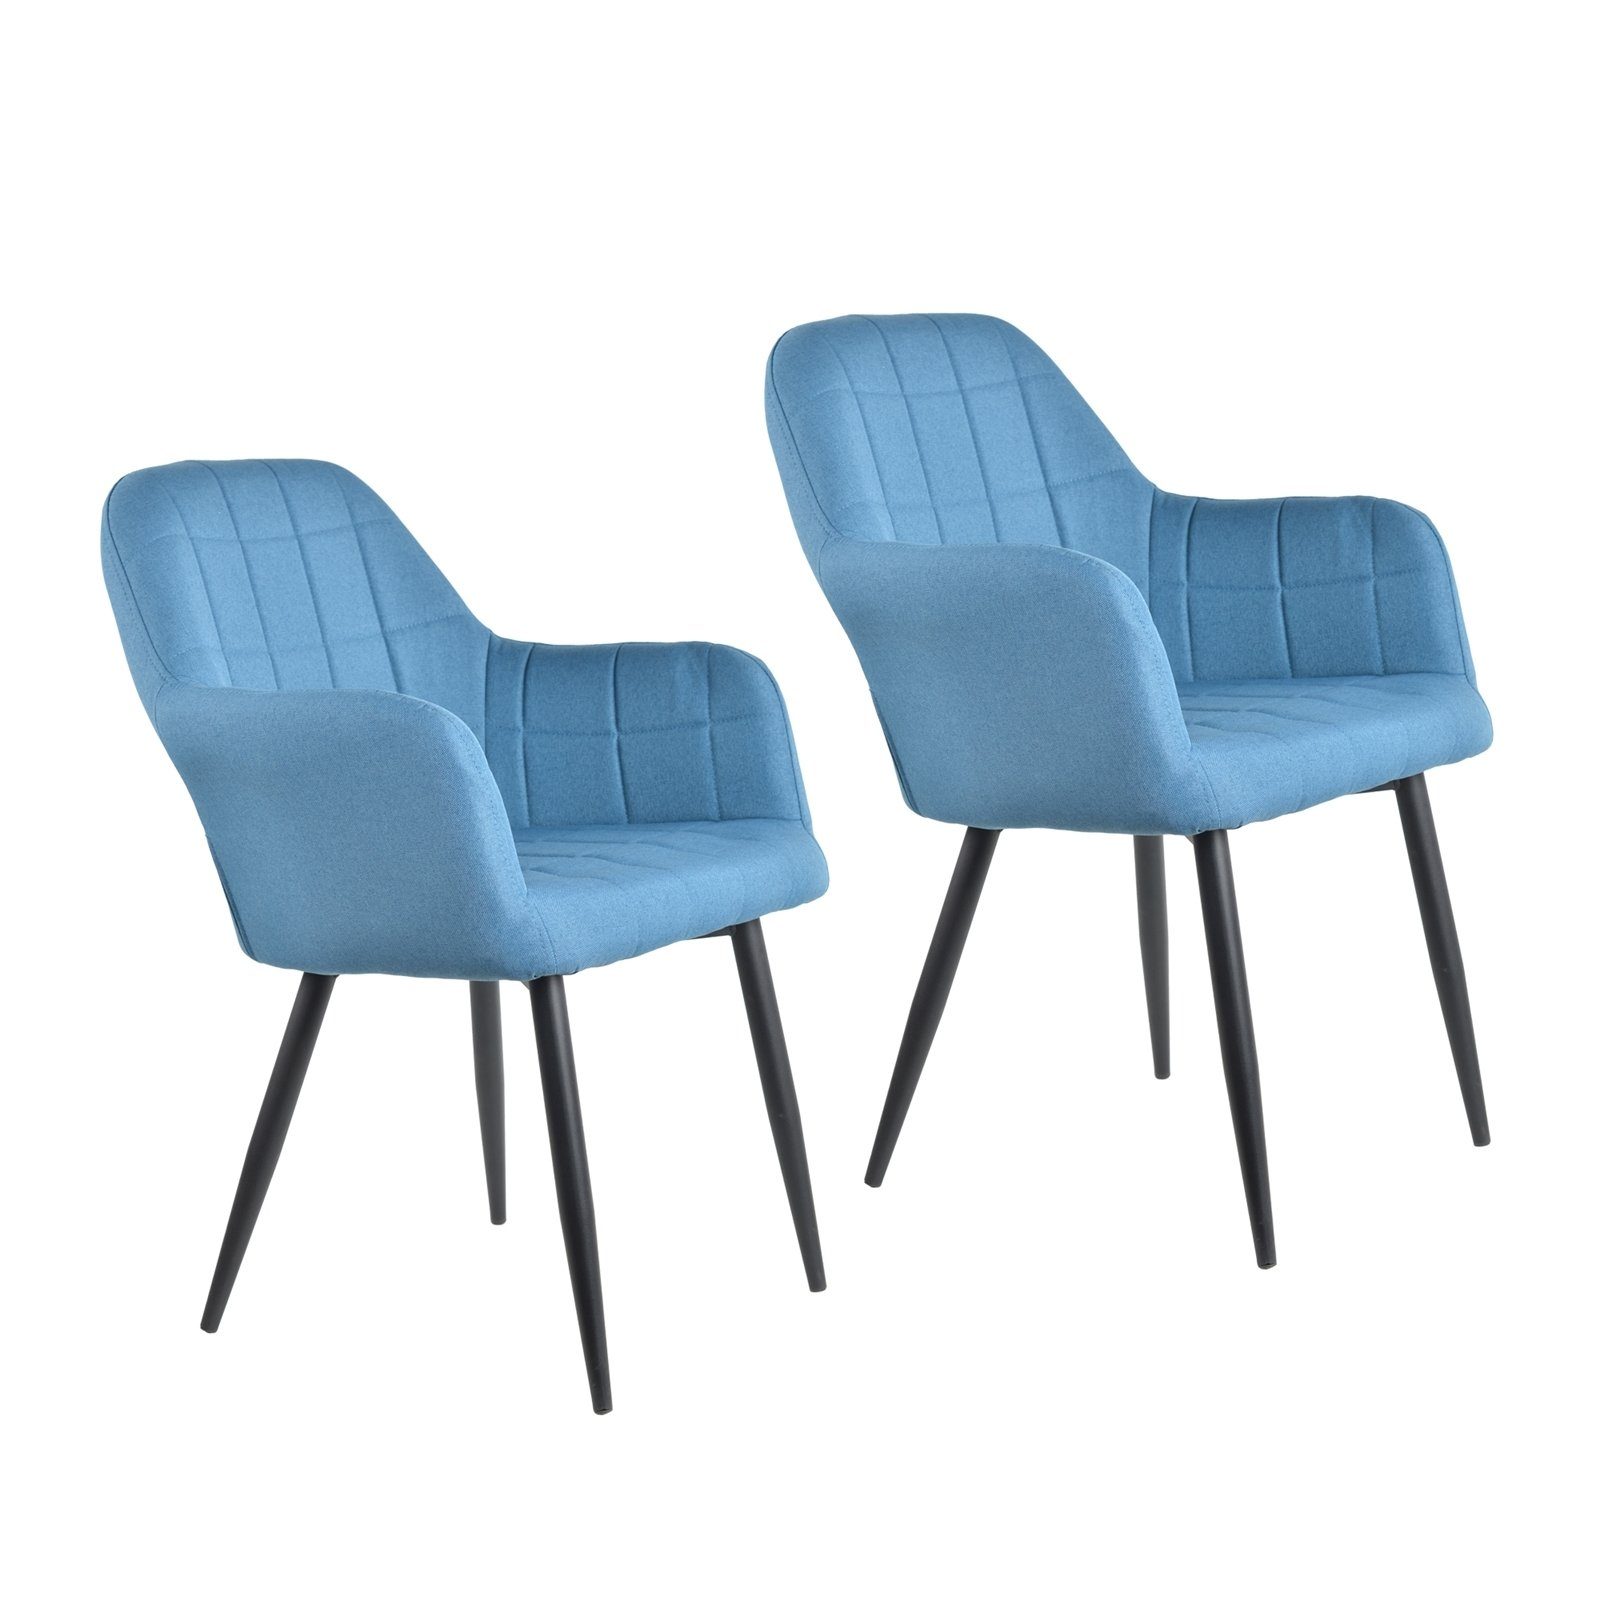 Großer Rabatt auf neue Produkte HTI-Living Esszimmerstuhl Stuhl Blau 2er-Set Albany Armlehnenstuhl Polsterstuhl Esszimmerstuhl Webstoff (Set, St), 2